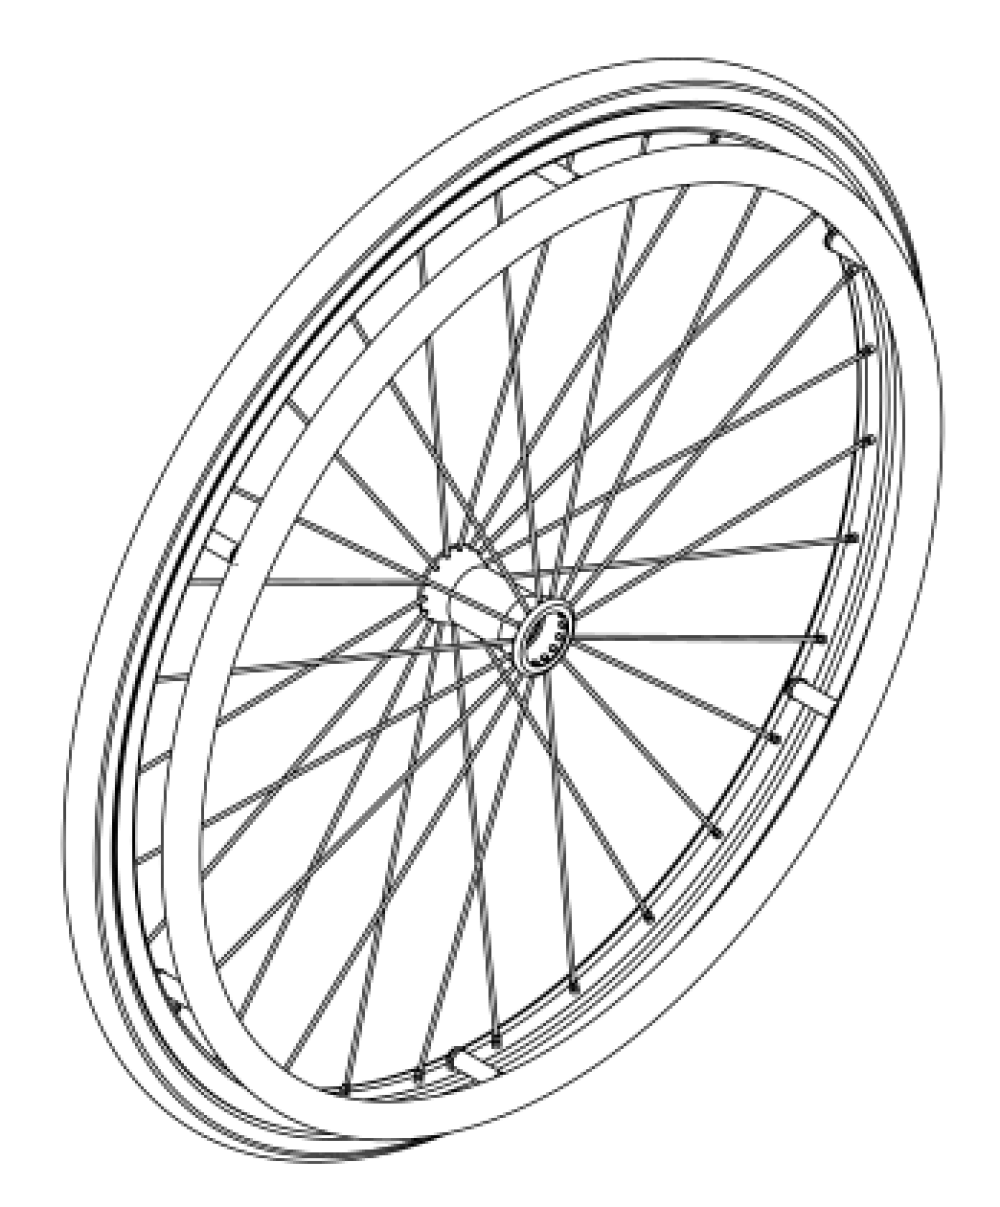 (discontinued) Focus Spoke Wheel / Tire / Handrim Kits parts diagram